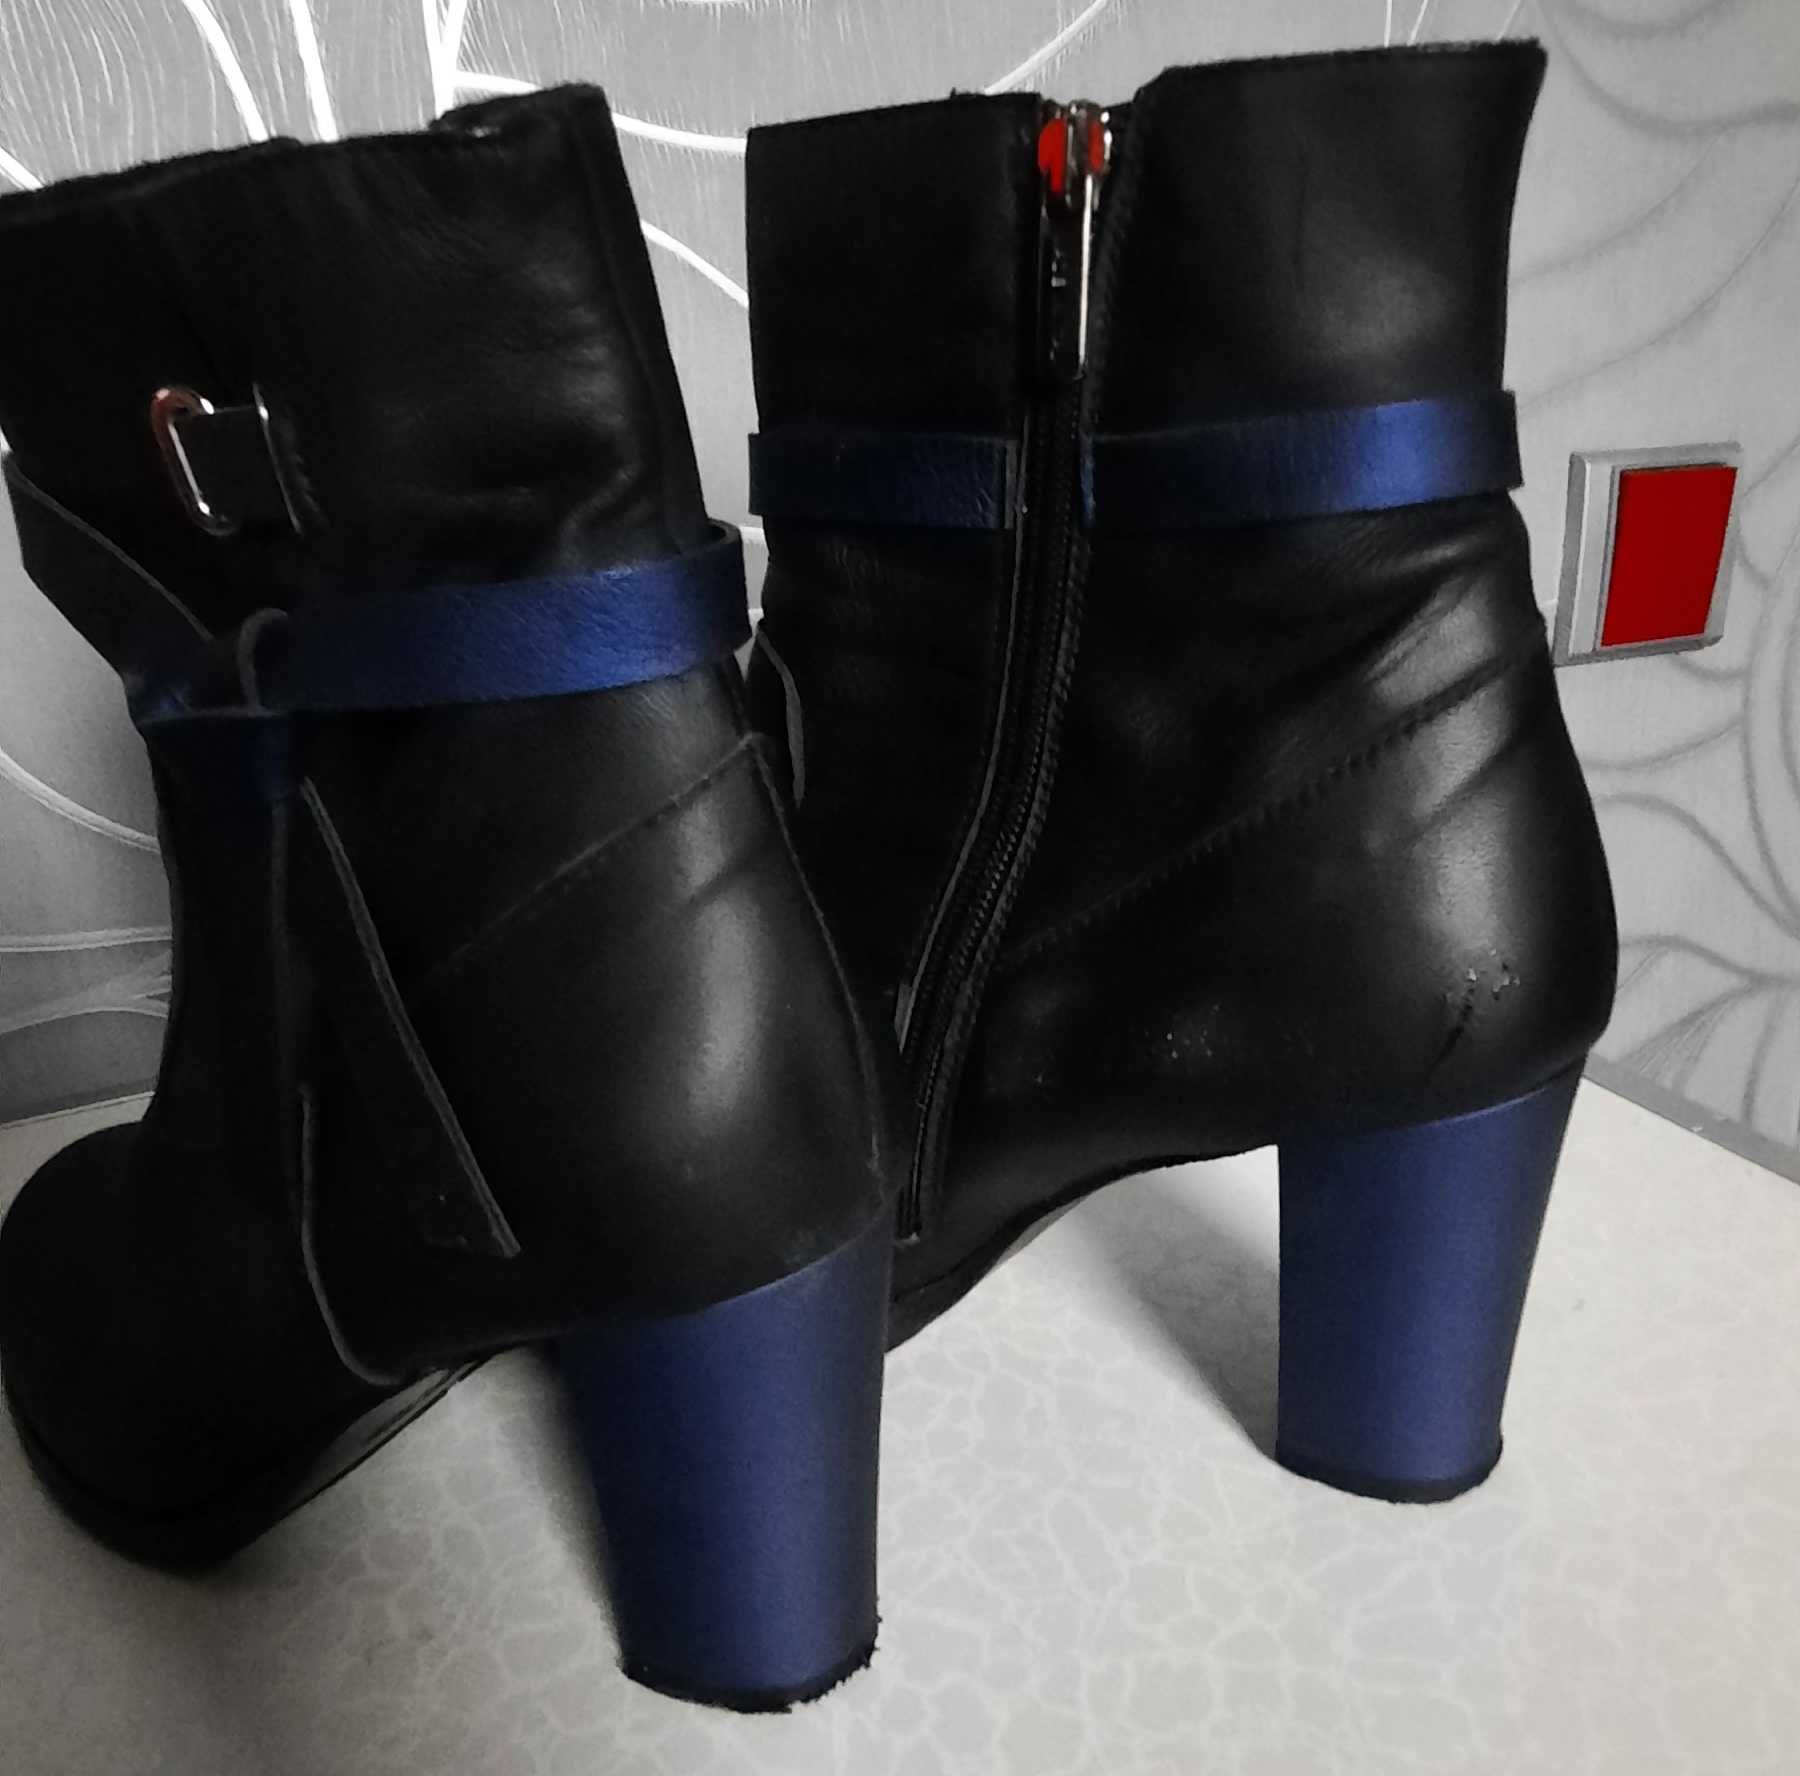 Ботинки  женские на  каблуке   фирмы VERO  CUOIO Италия